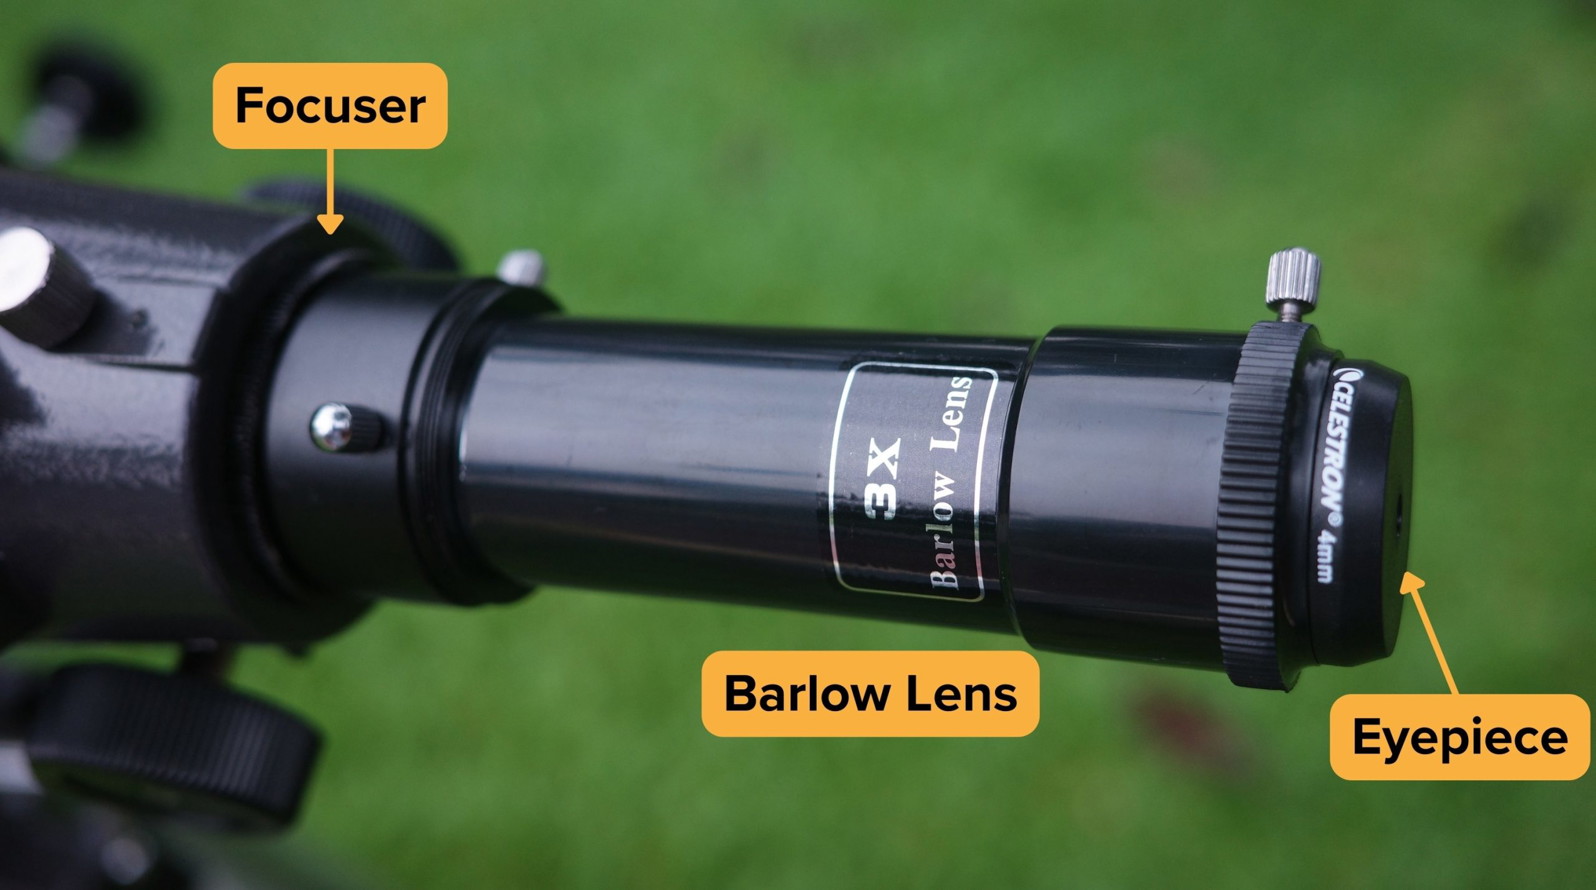 Barlow lens added between eyepiece and focuser